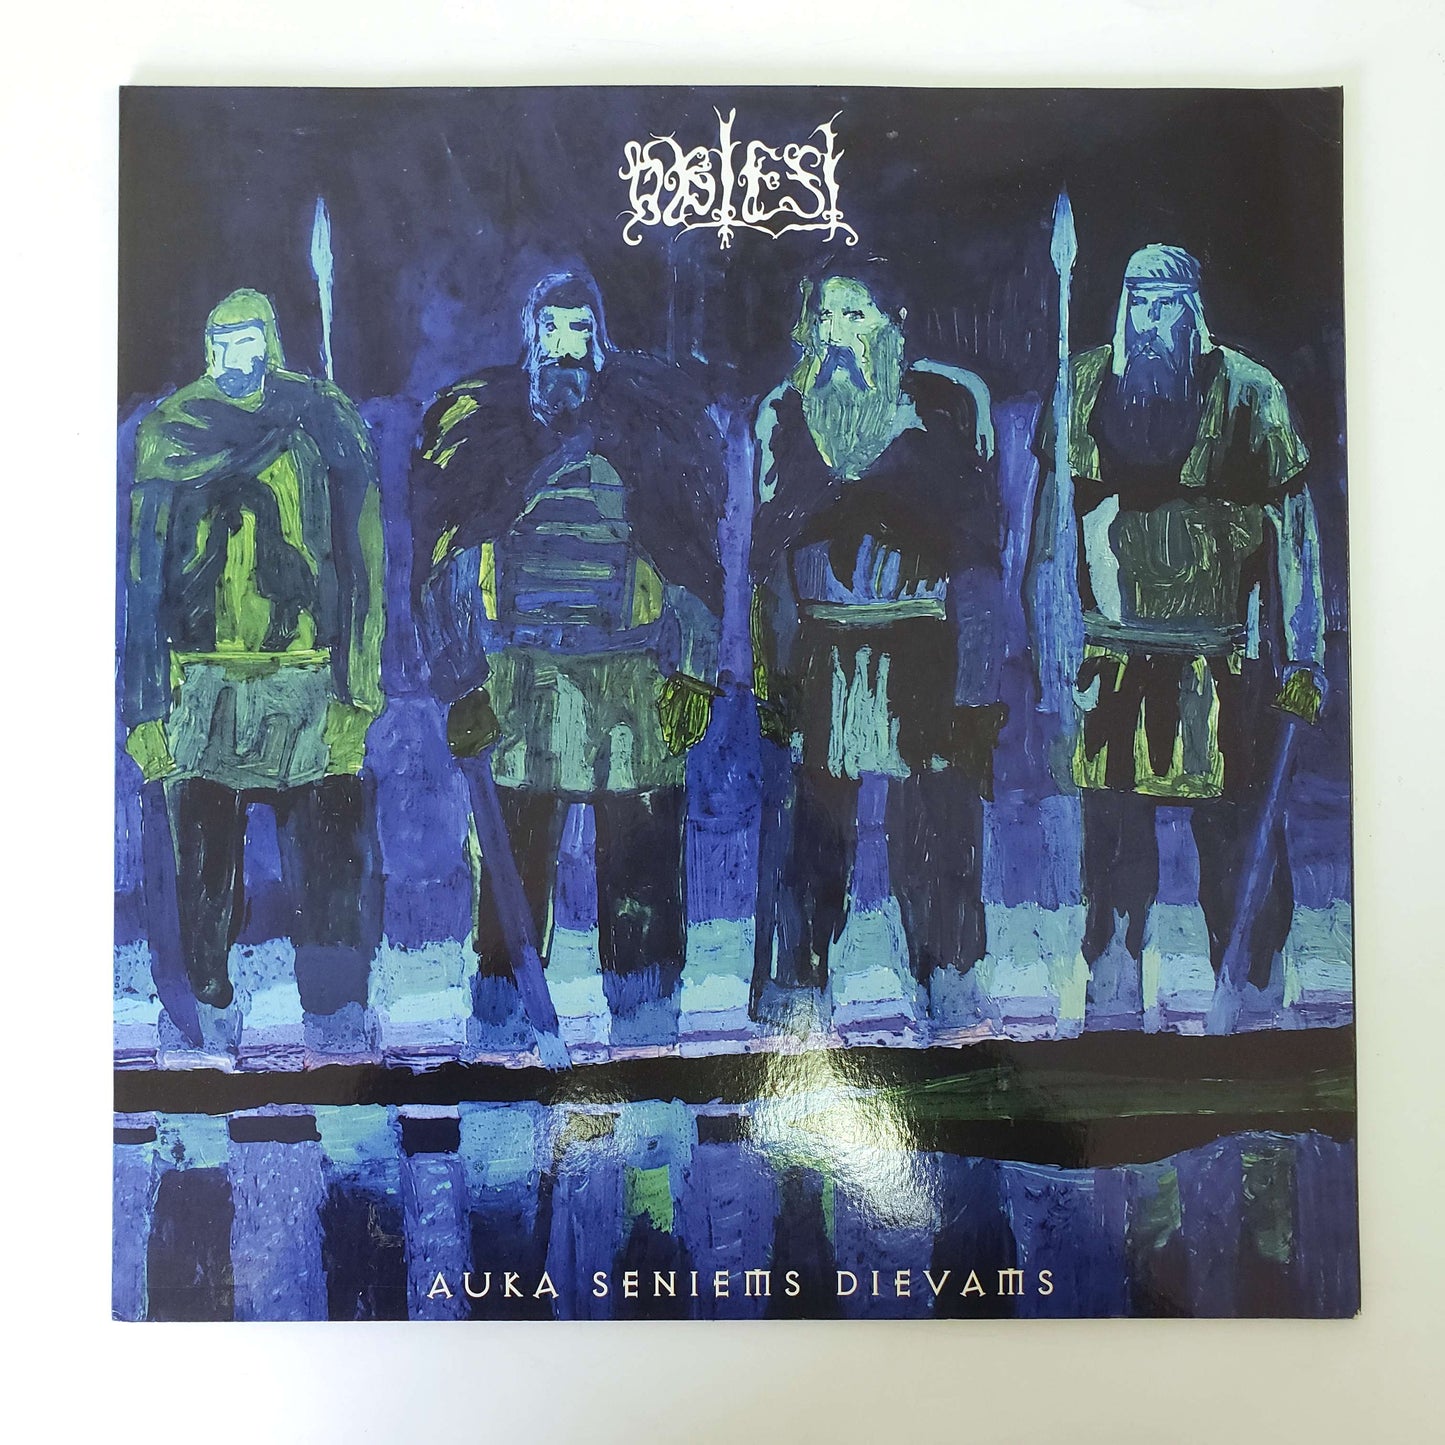 Obtest - Auka Seniems Dievams original LP (used)